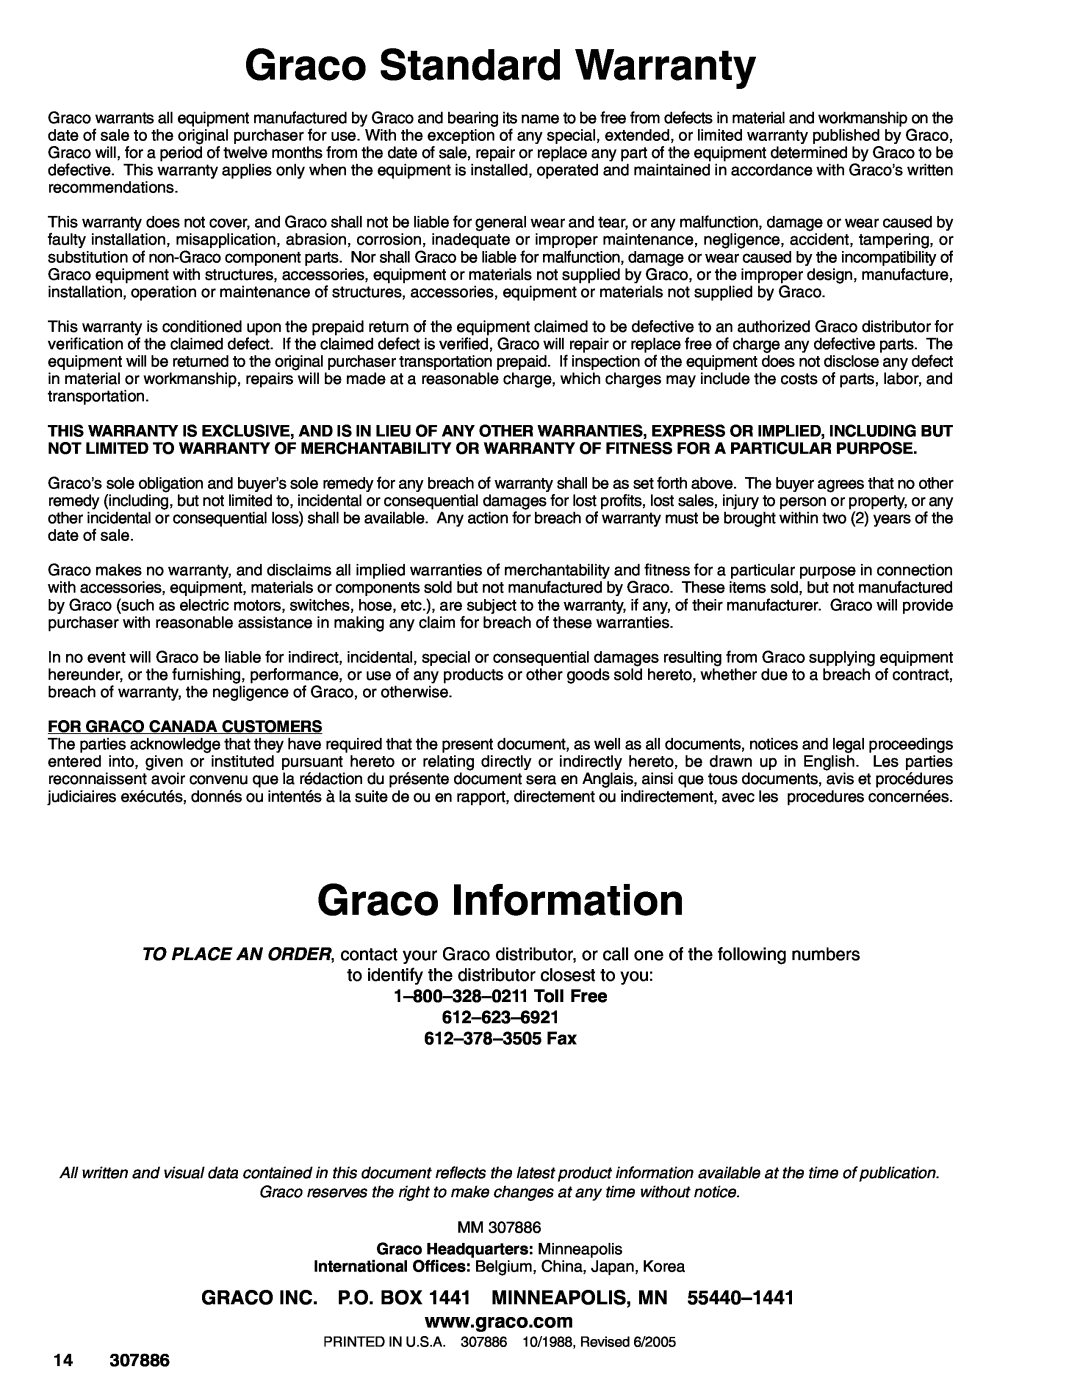 Graco Series B, 222121 warranty Graco Standard Warranty, Graco Information 